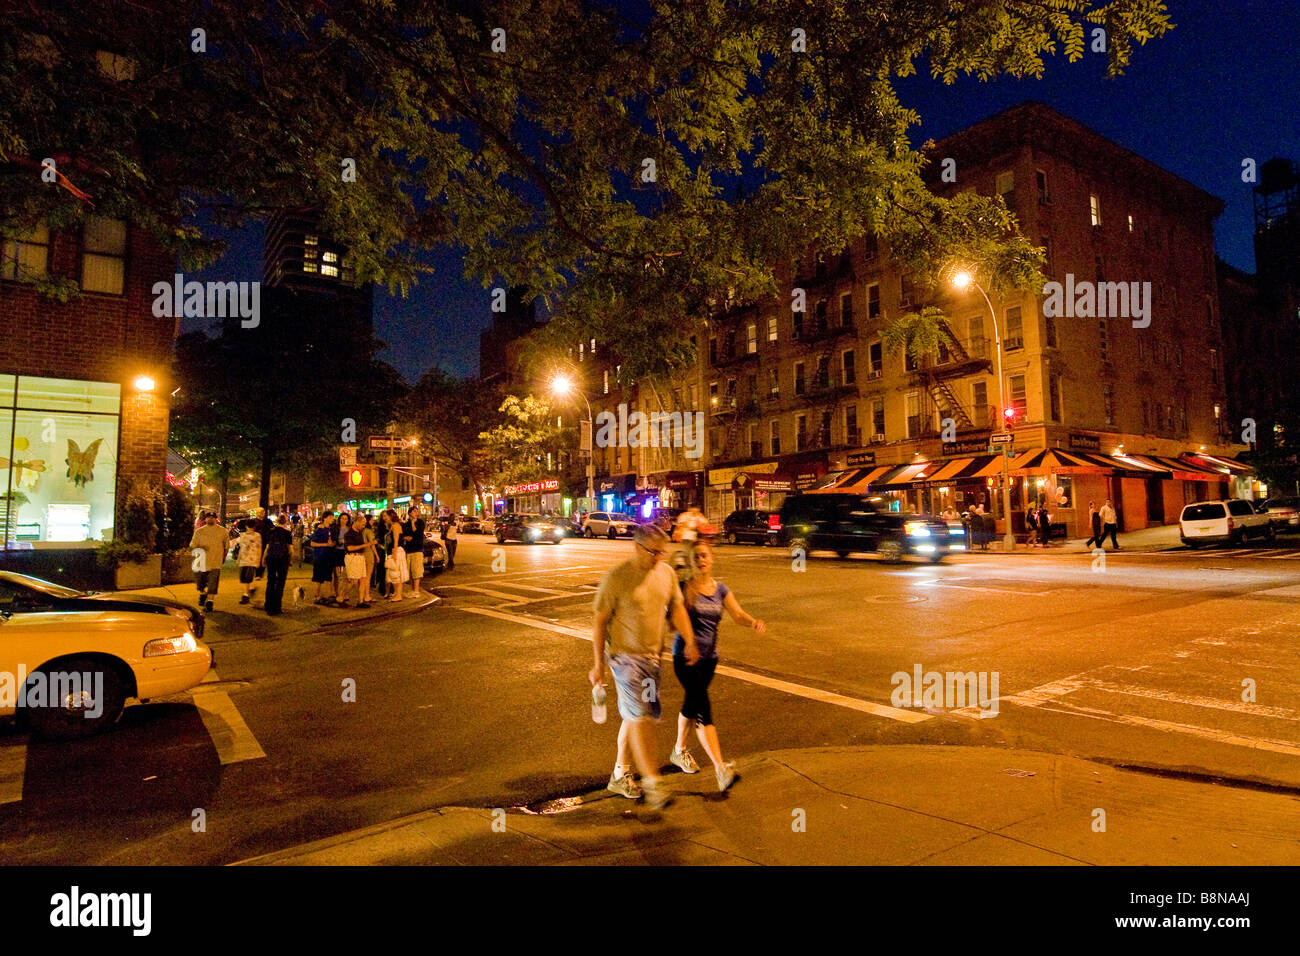 Pedestrians walking along 93rd street at night Stock Photo